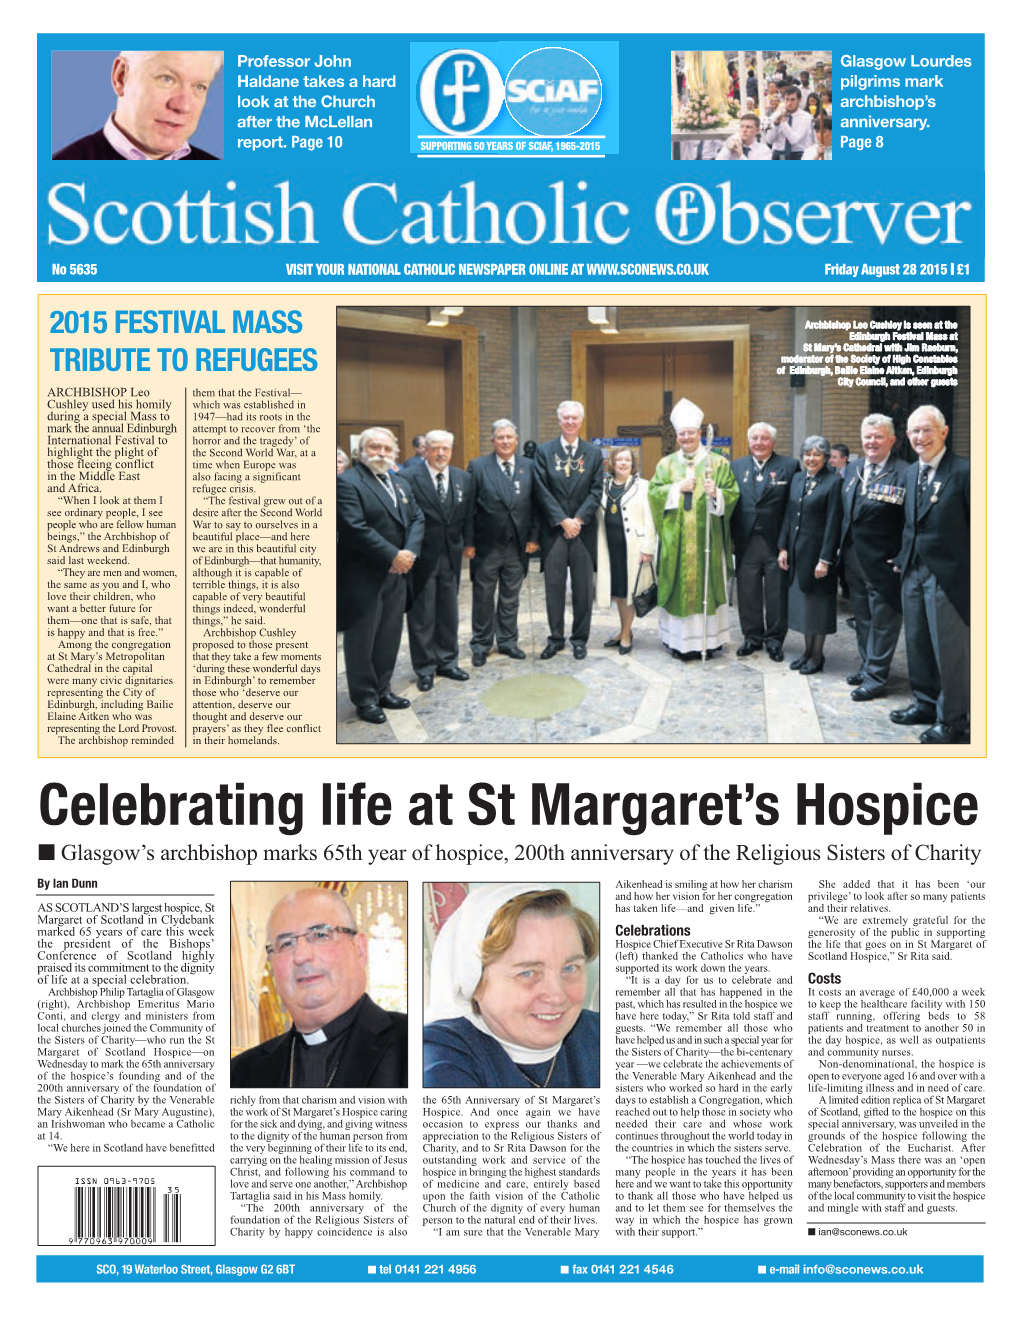 Celebrating Life at St Margaret's Hospice